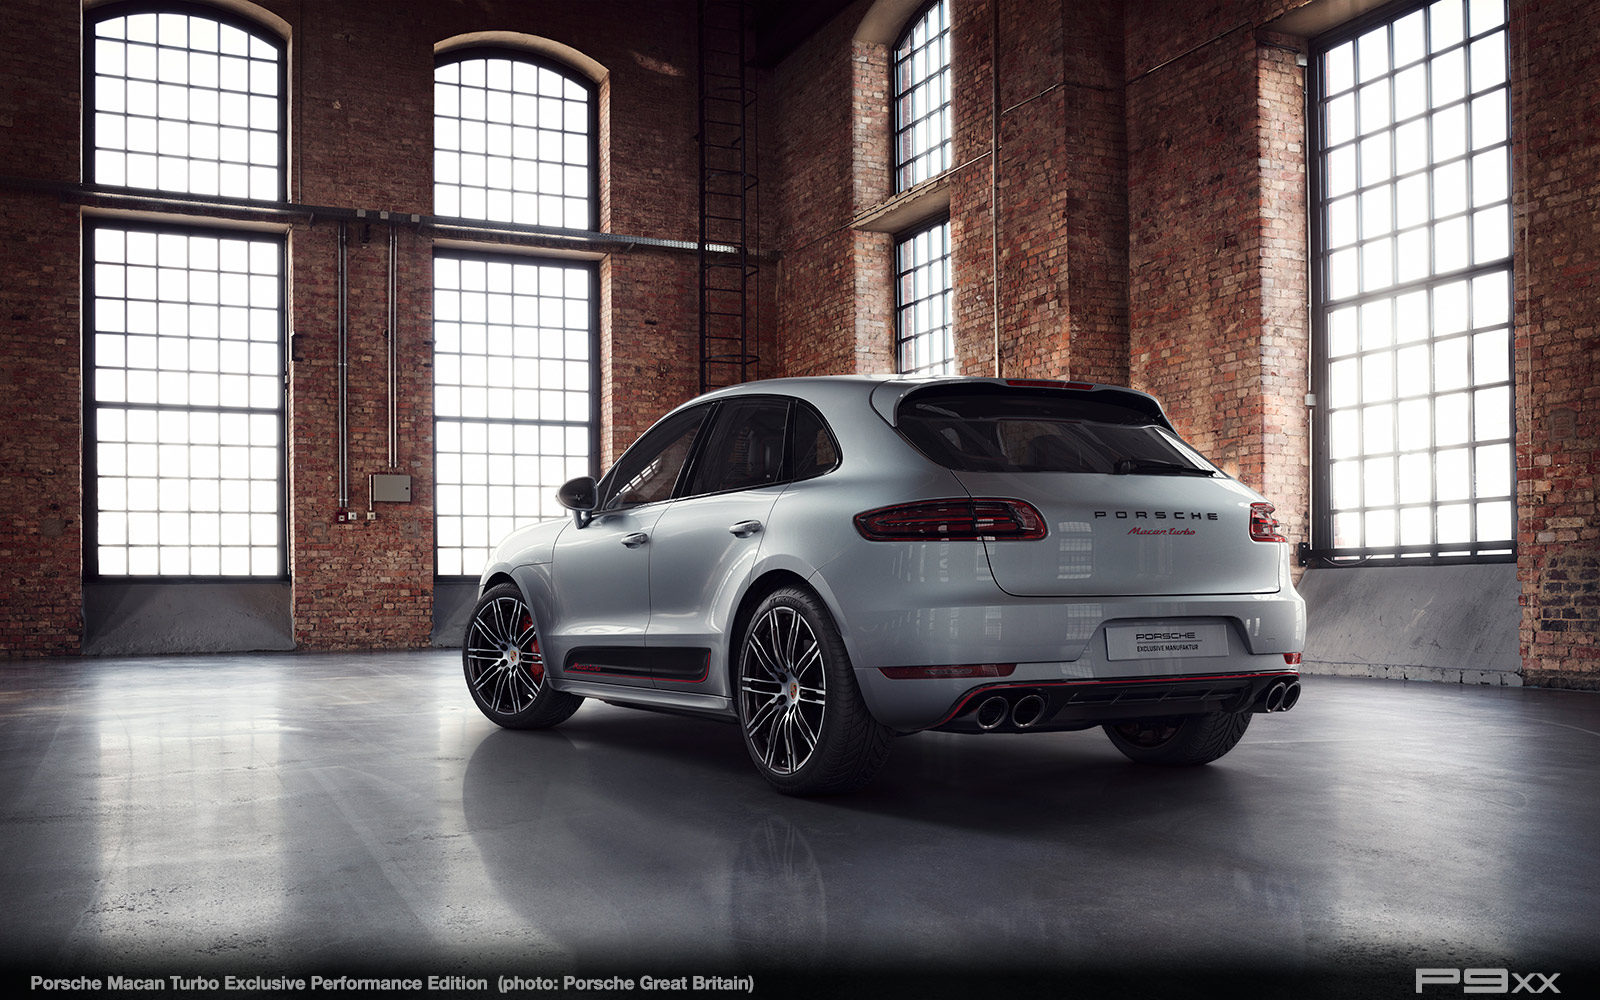 Porsche-Macan-Turbo-Exclusive-Performance-Edition-387